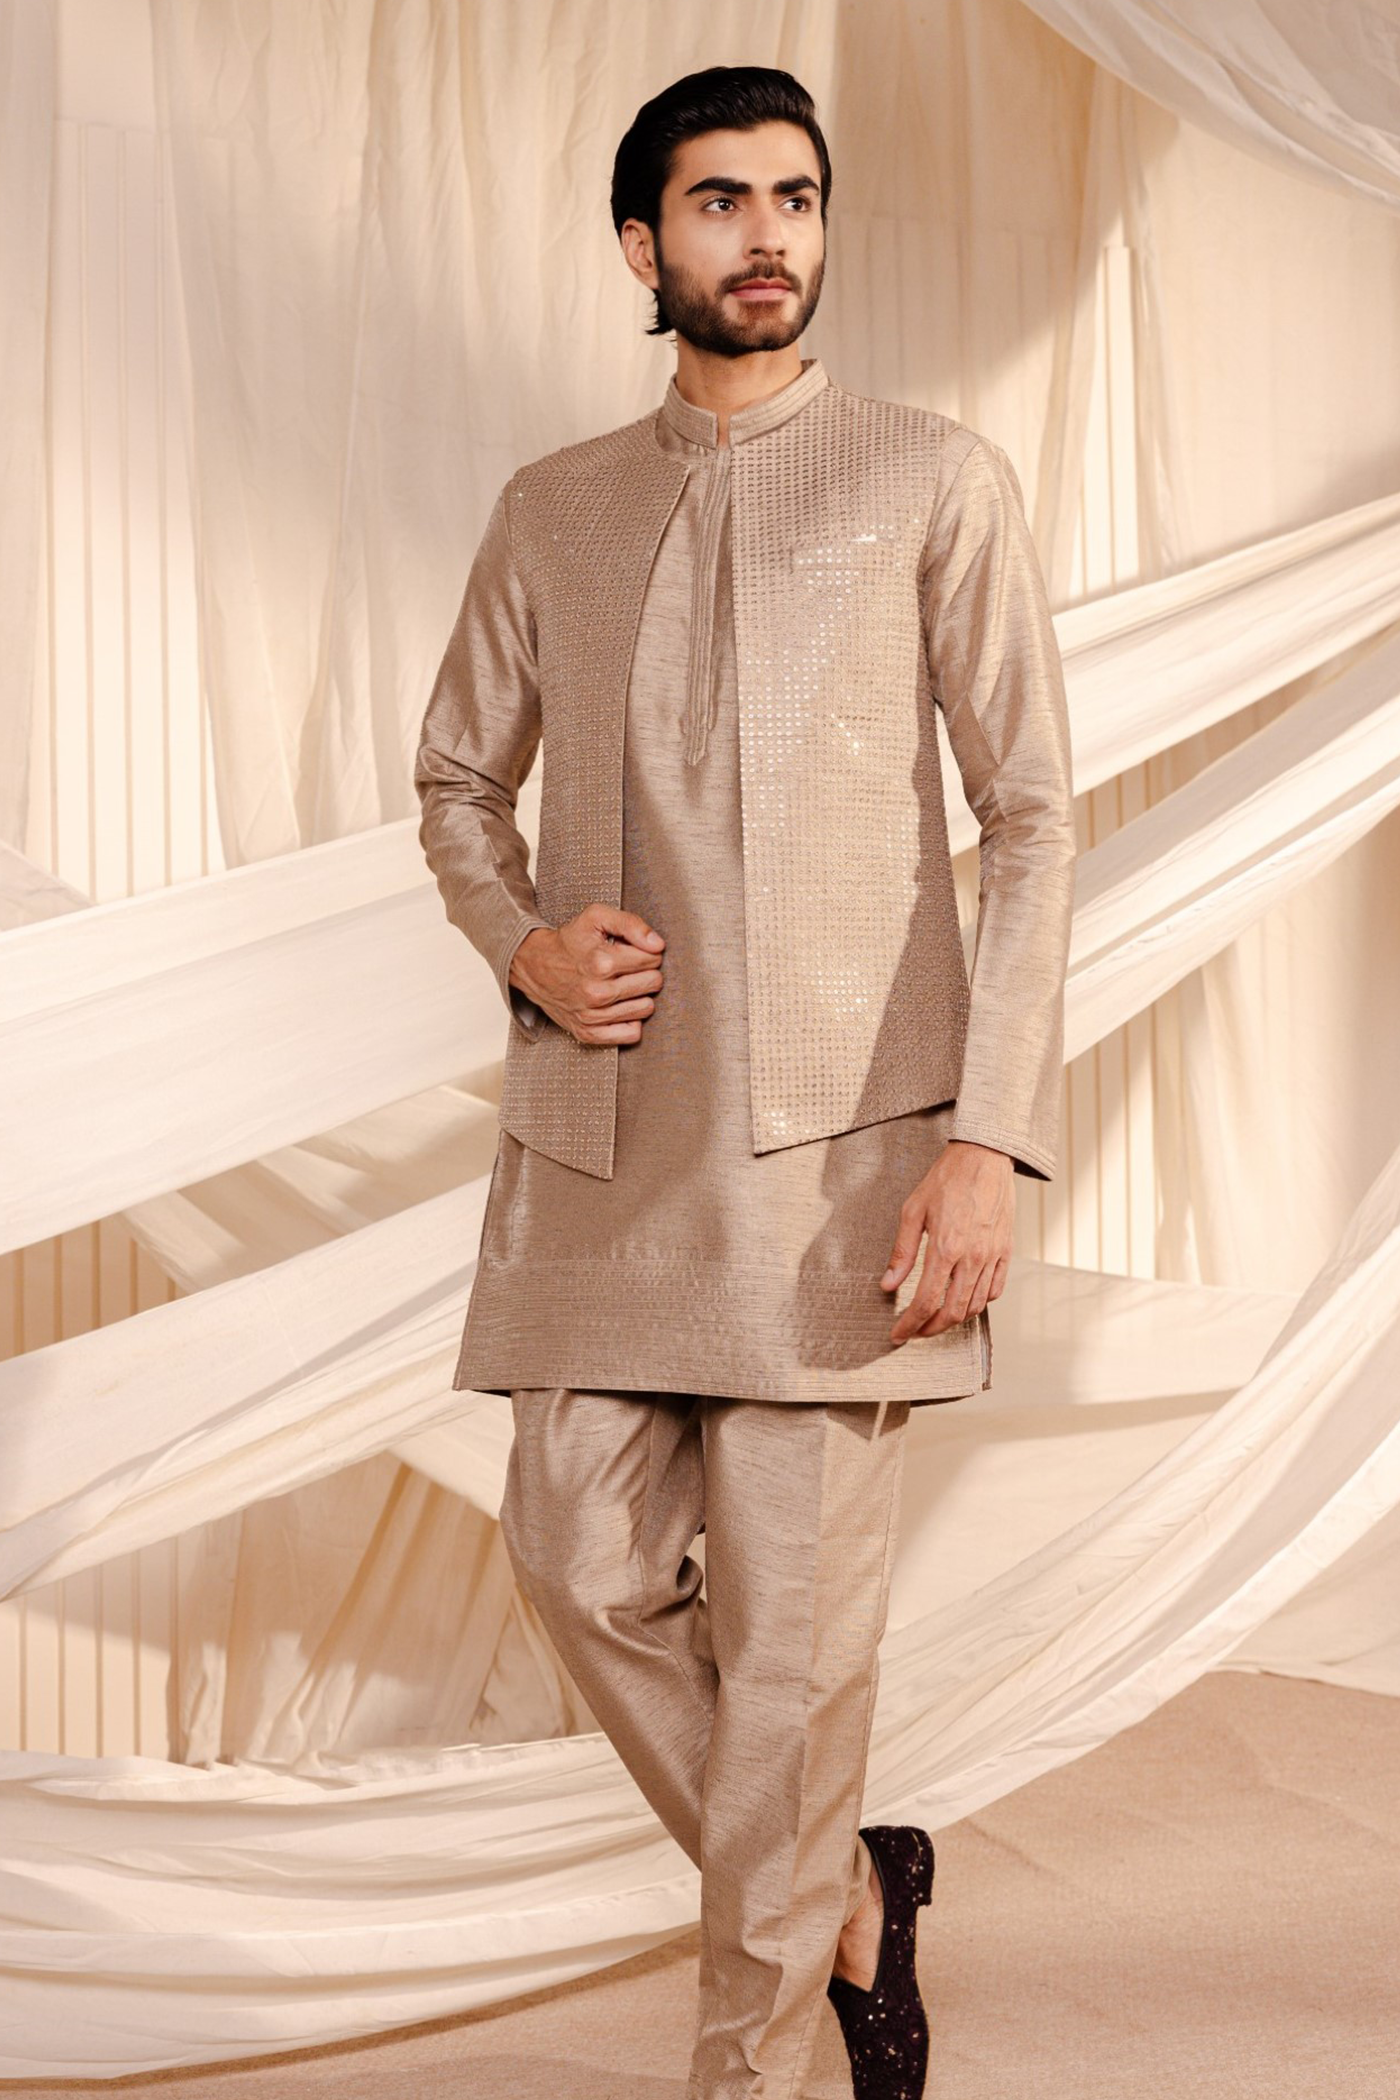 Jodhpuri Suit - Buy Men's Jodhpuri Suit online for Wedding, Partywear | G3+  Fashion